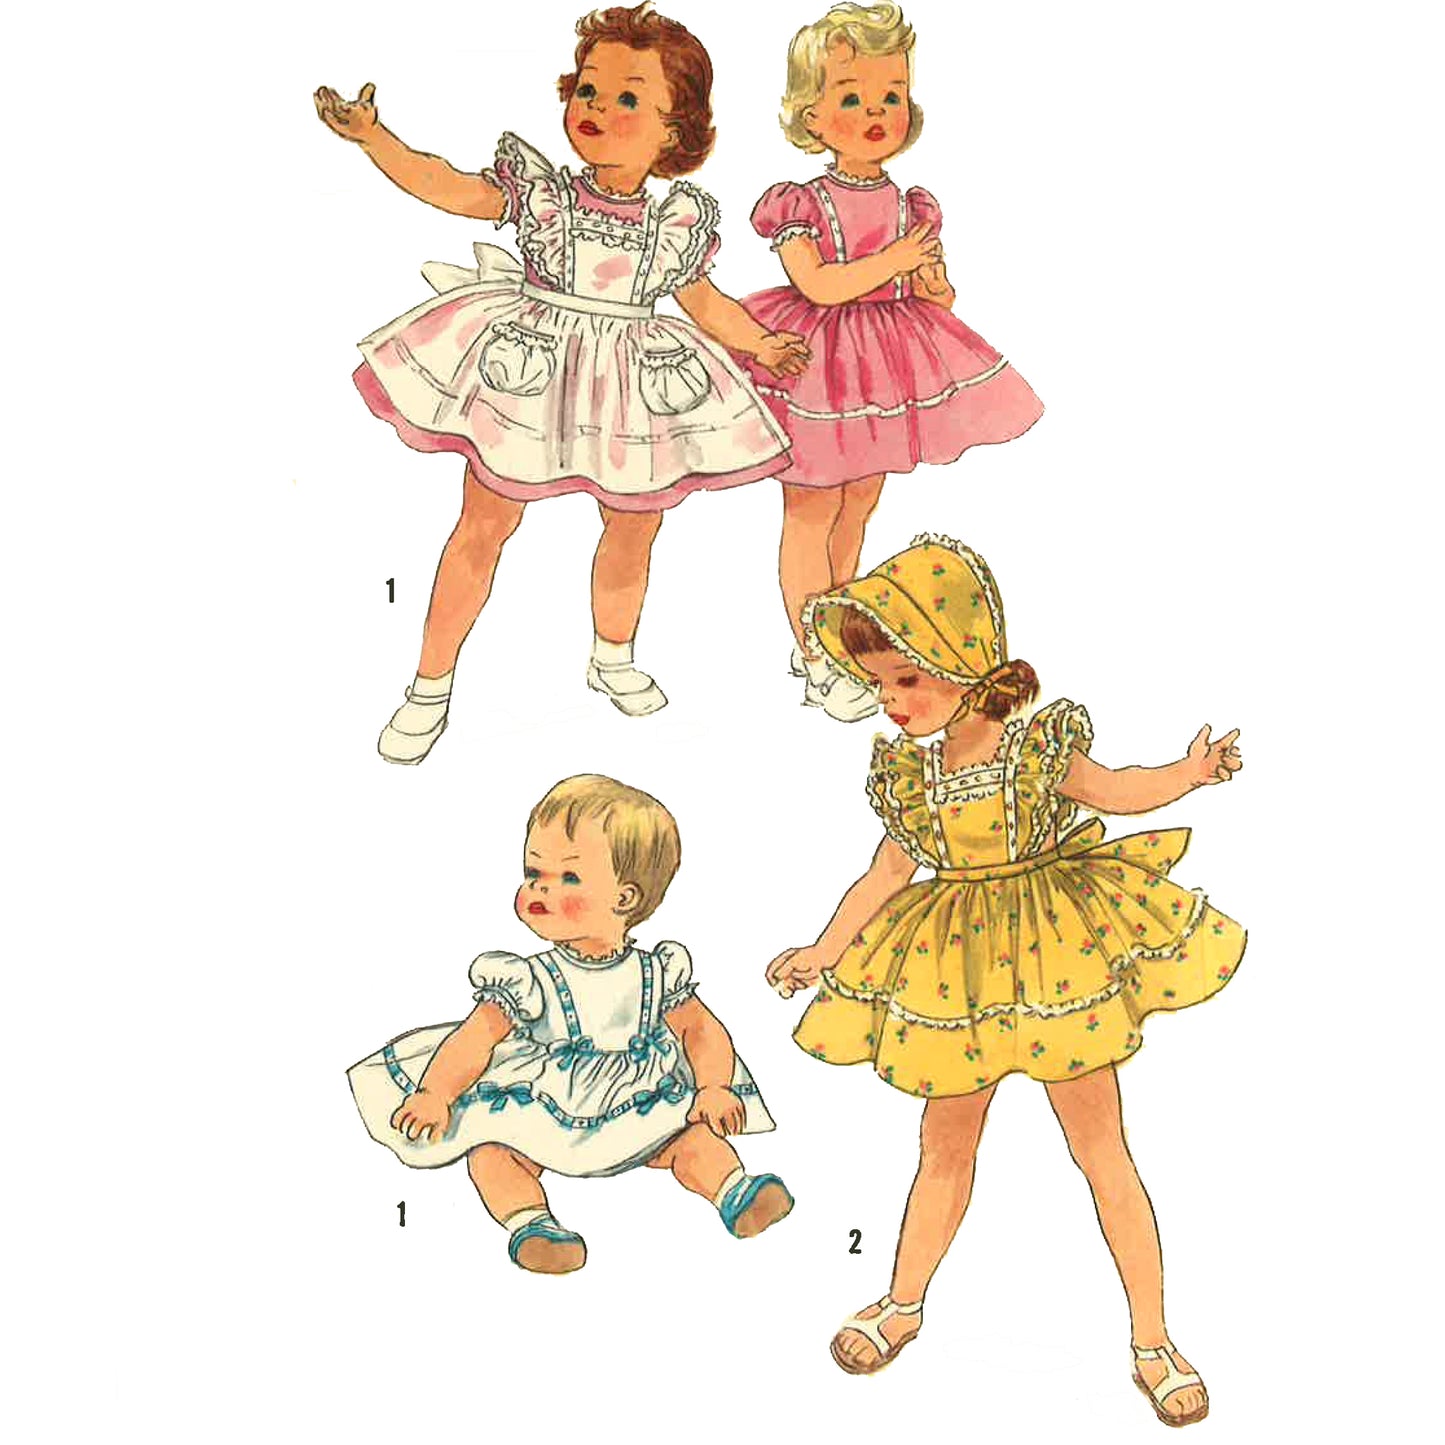 Children in dresses